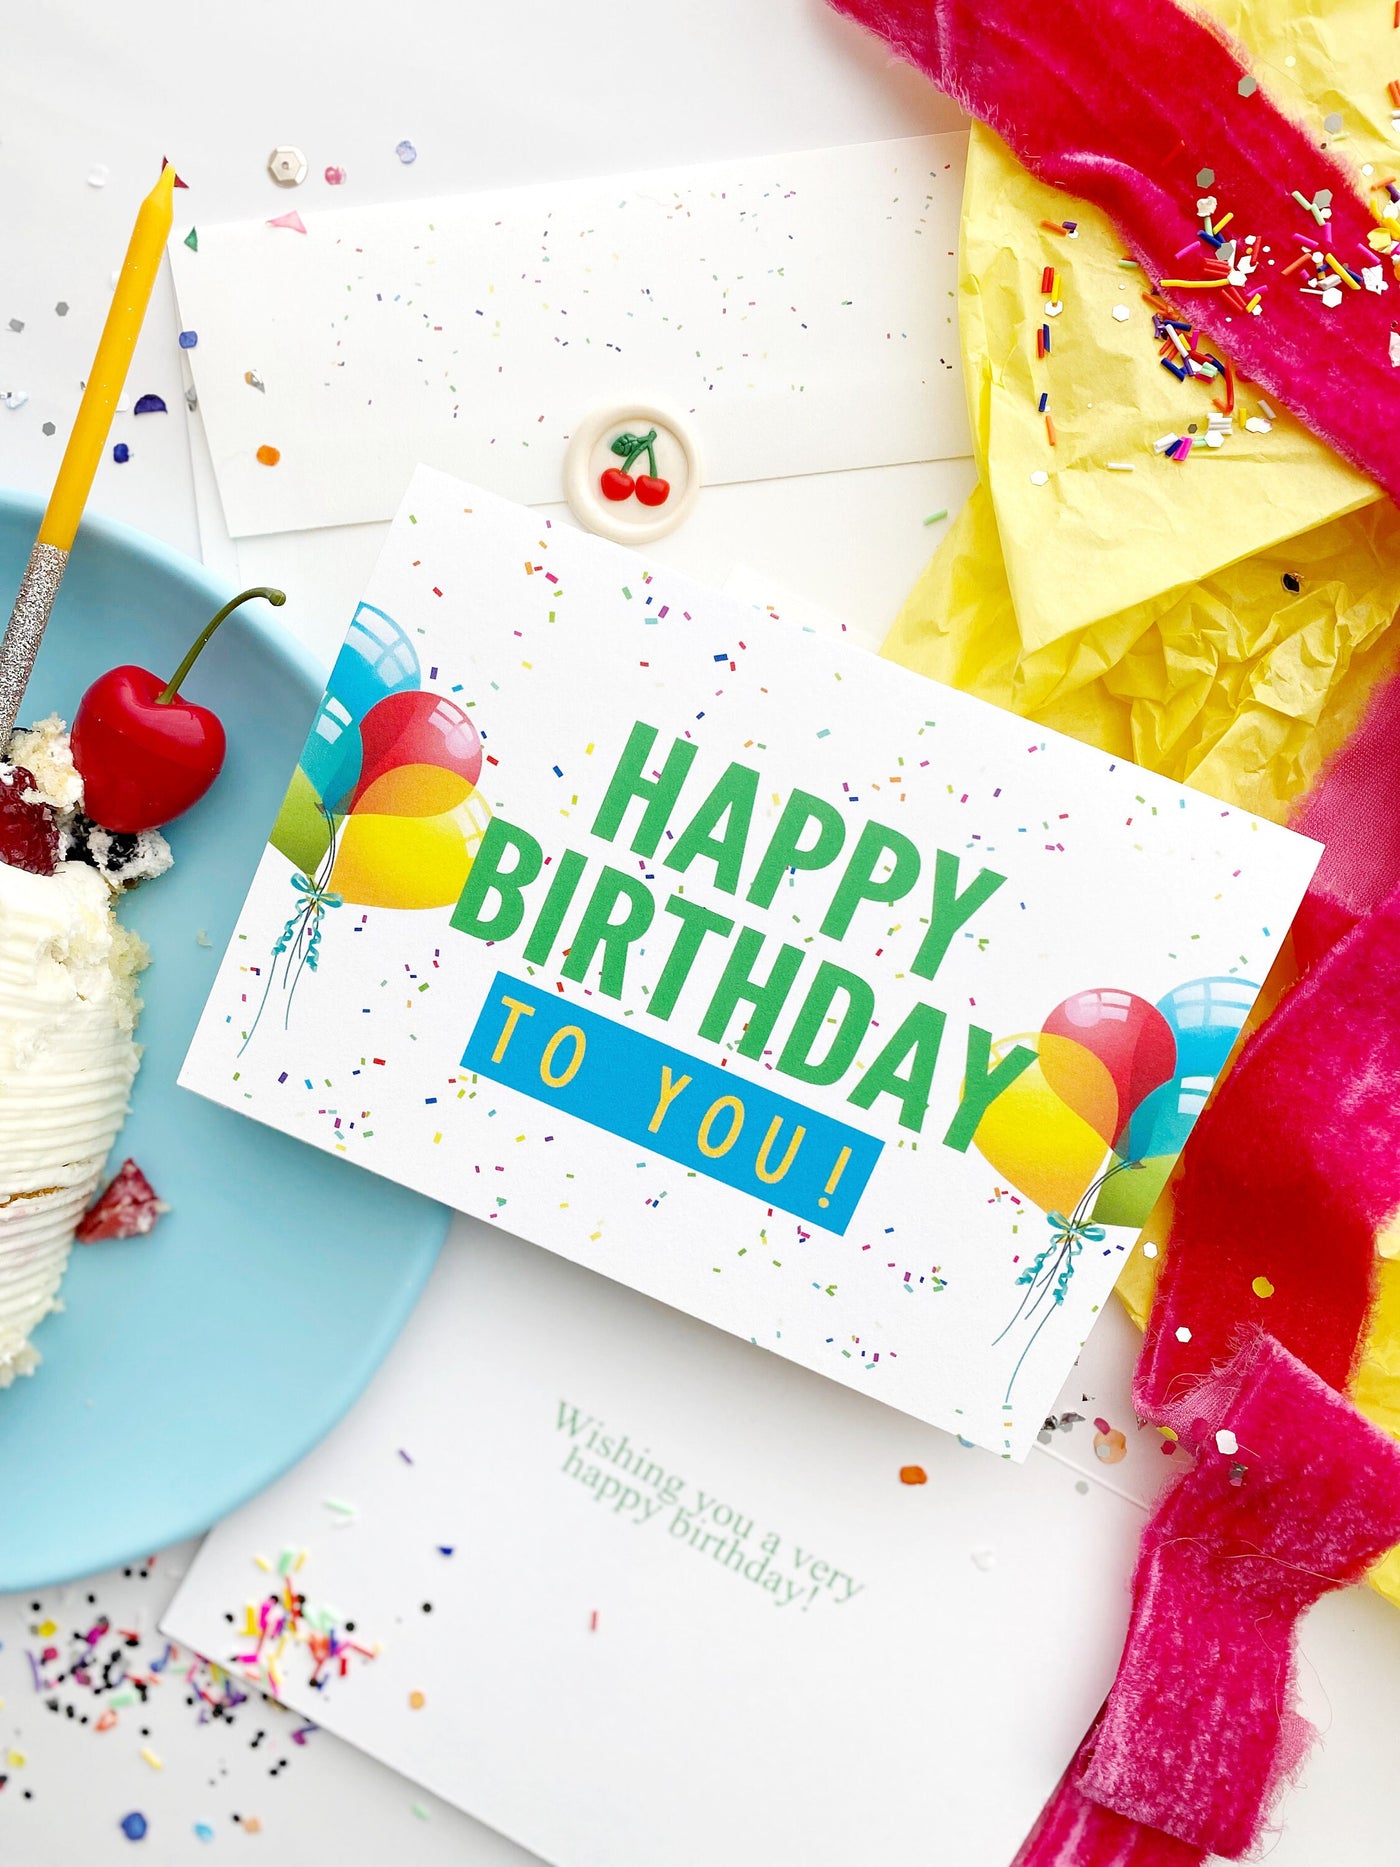 Adult Birthday Greeting Card, Birthday Card for Adult, Happy birthday Card, Custom birthday card for women & men, Balloon birthday card, 5x7